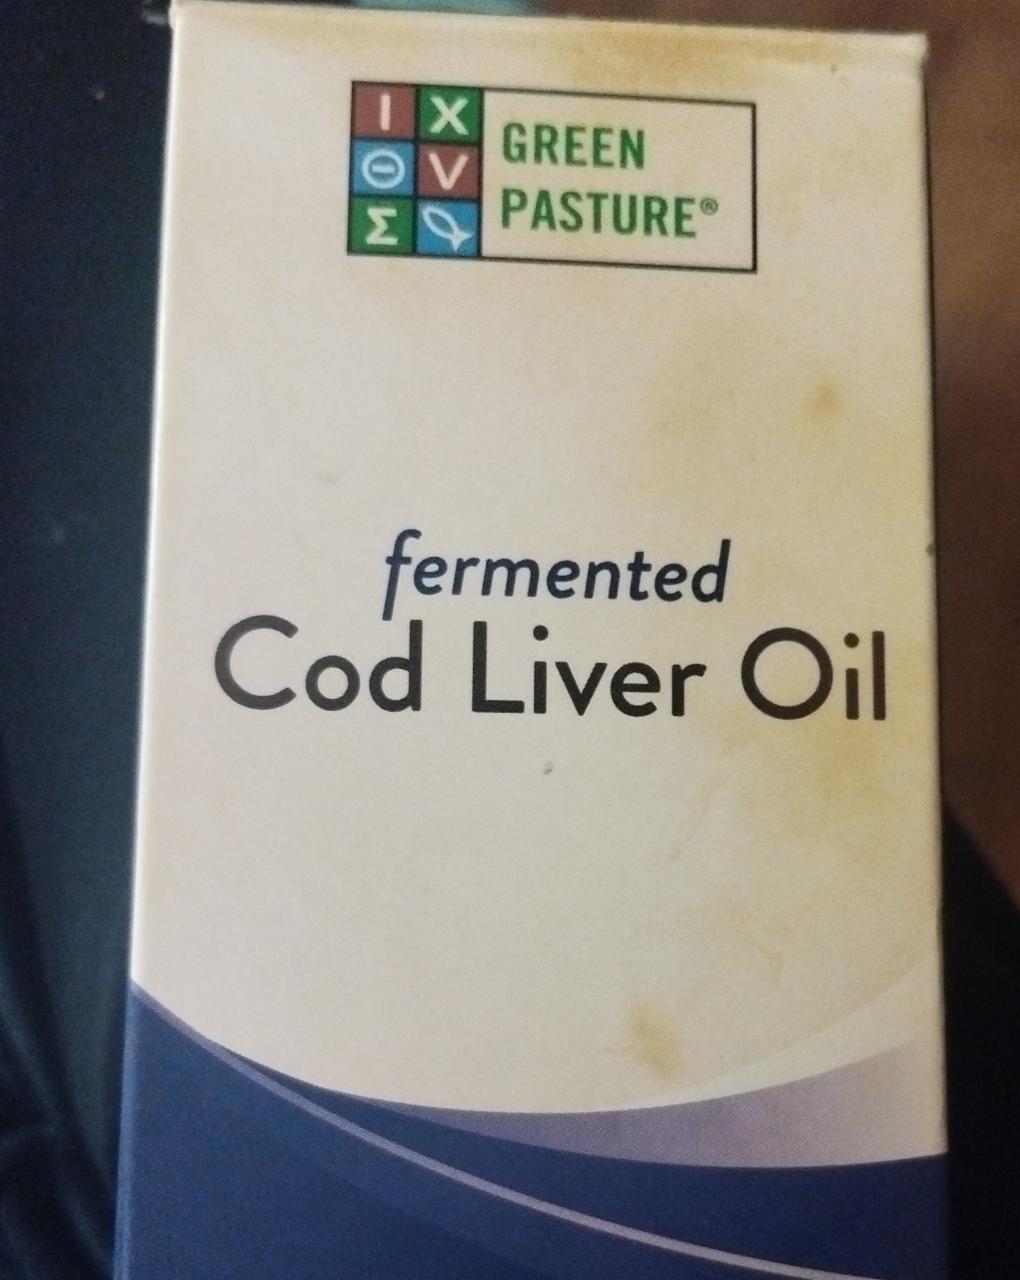 Fotografie - Cod liver oil fermented Green Pasture